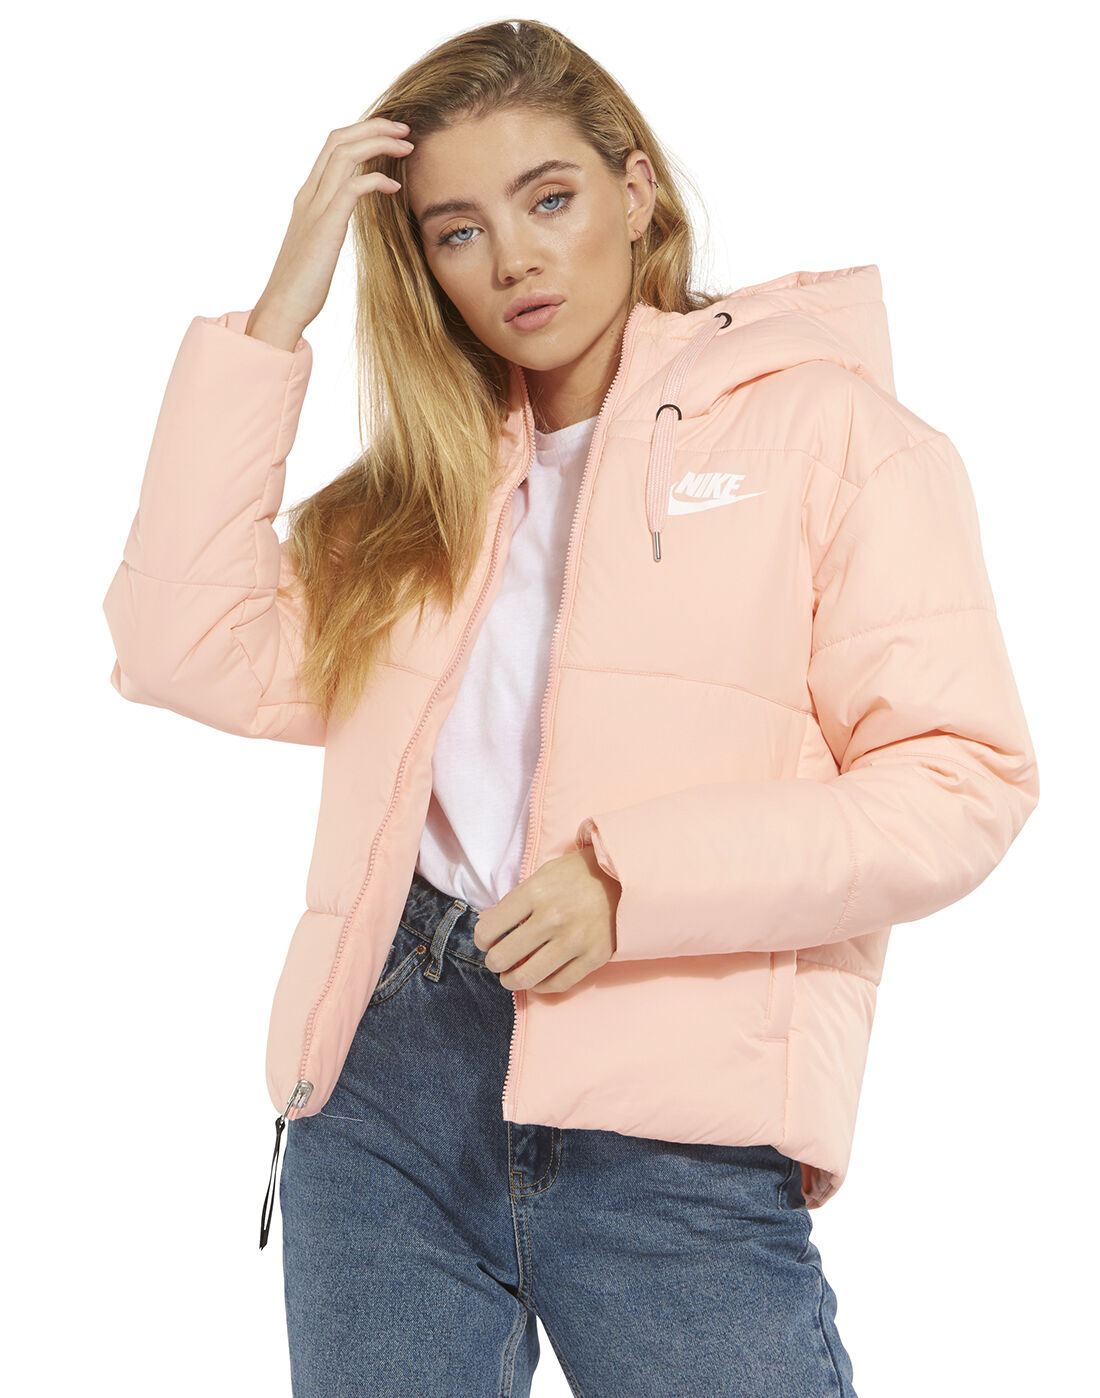 pink nike jacket womens